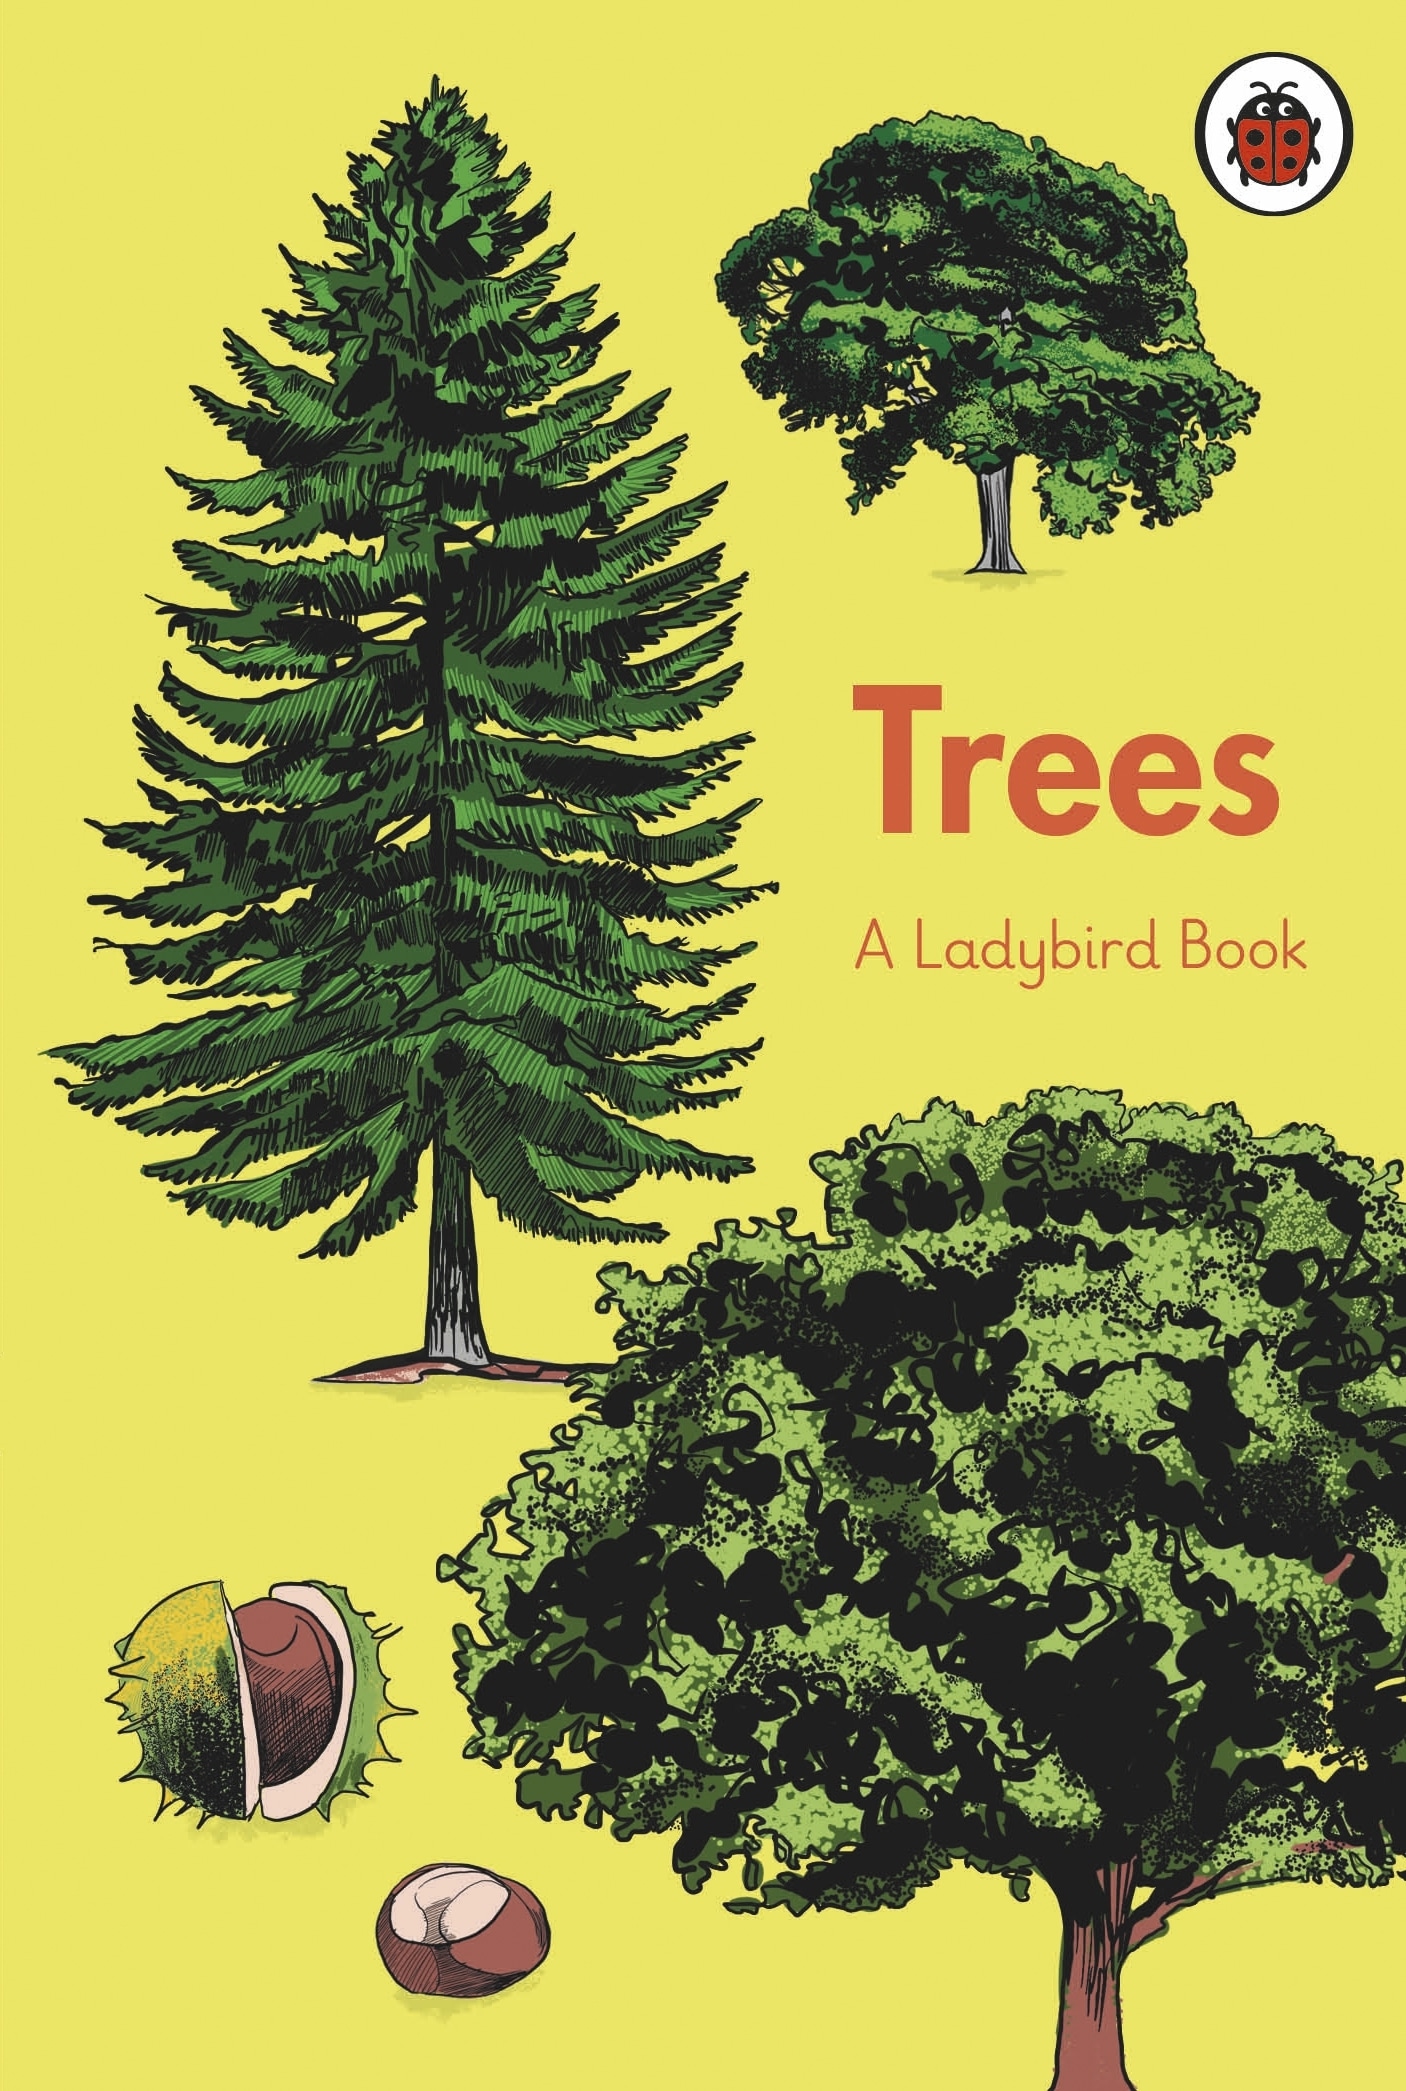 Book “A Ladybird Book: Trees” — May 6, 2021